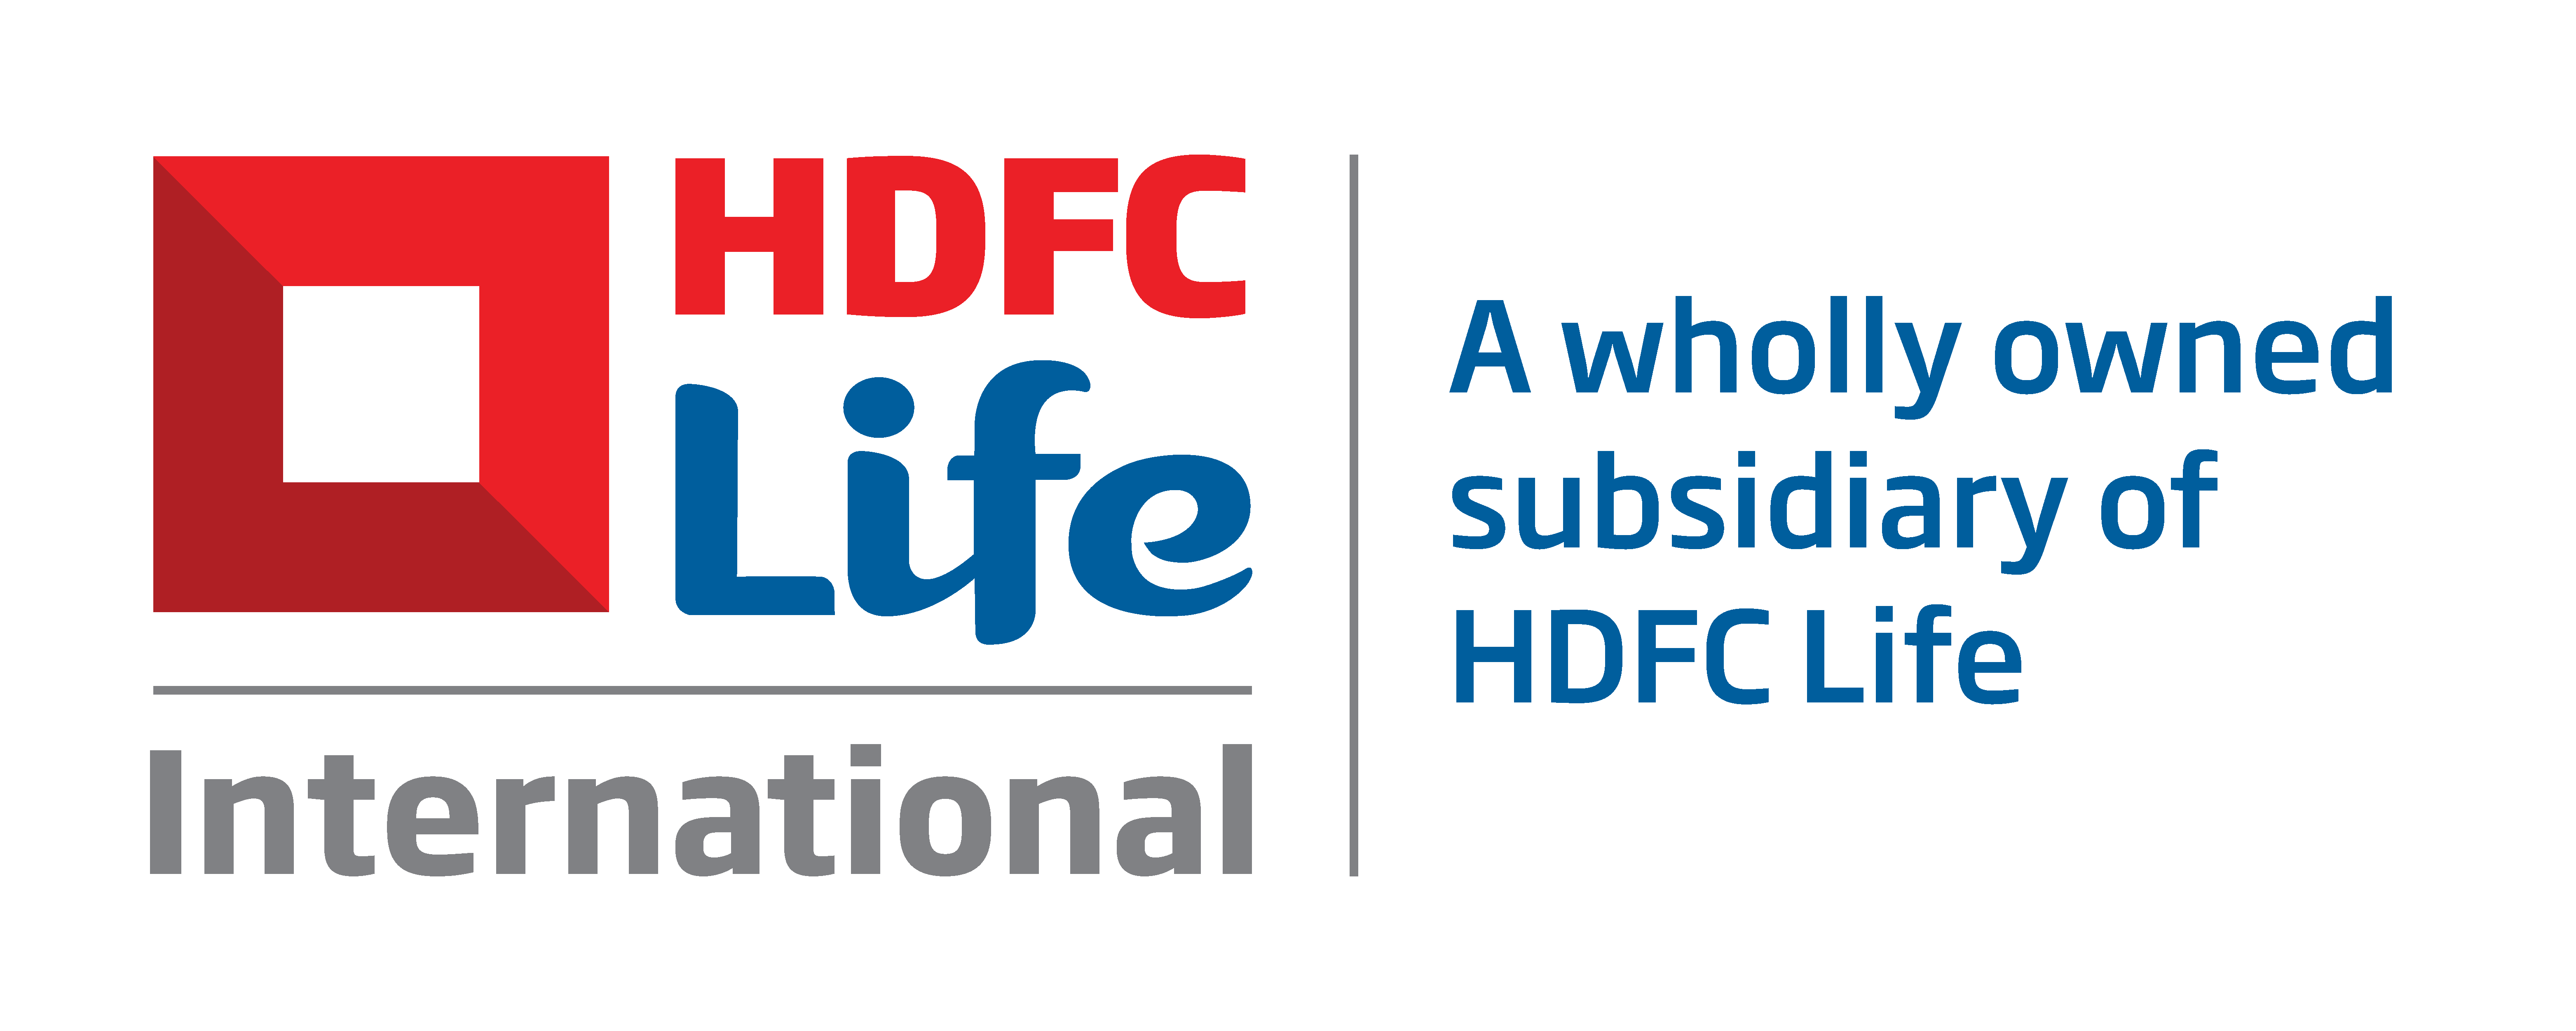 HDFC Life International